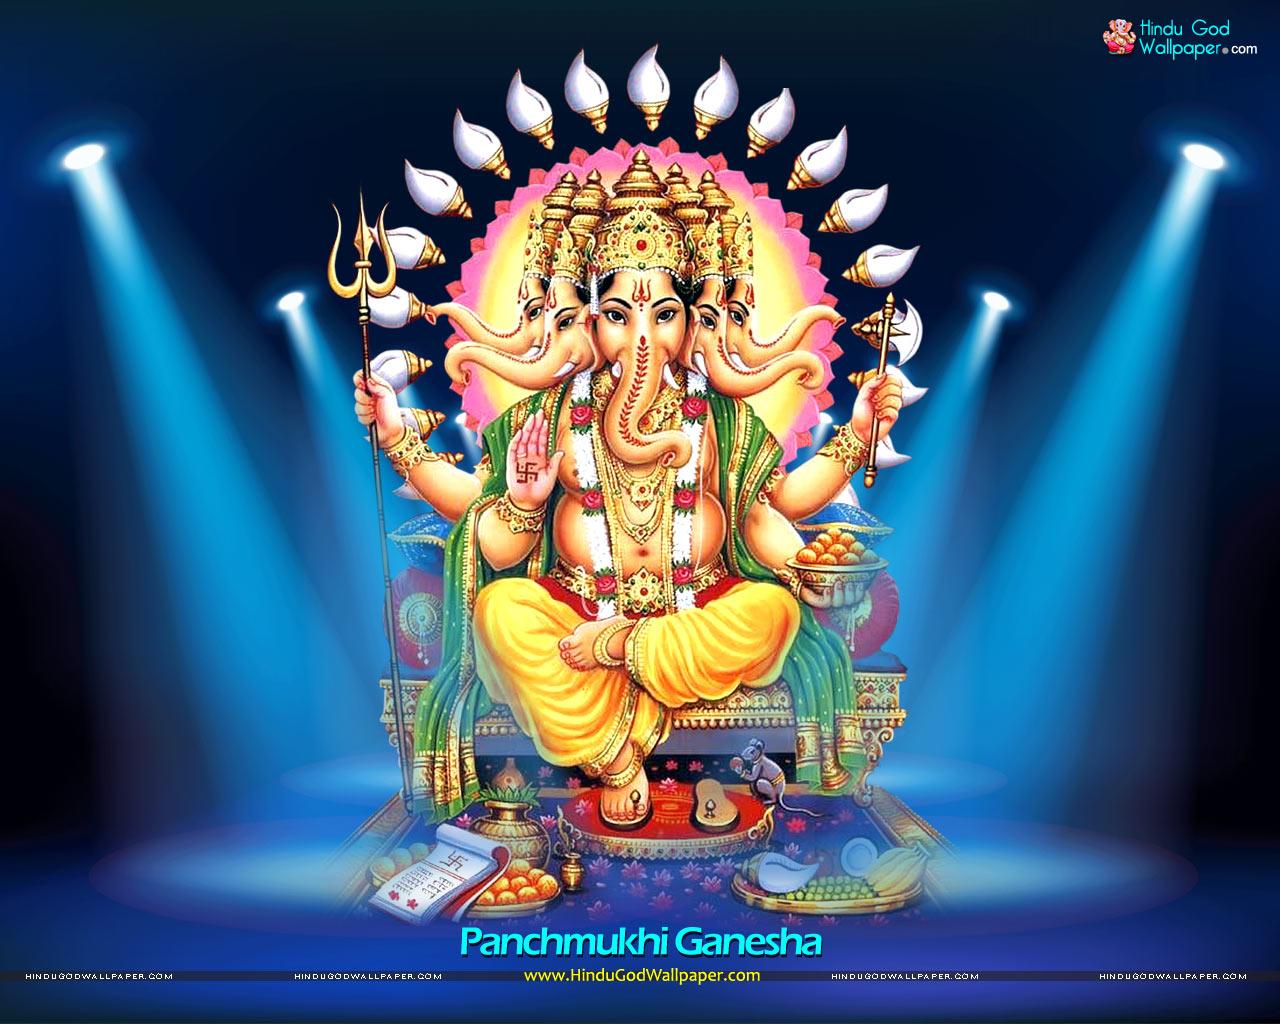 Panchmukhi Ganesha Wallpaper, Photo & Image Download